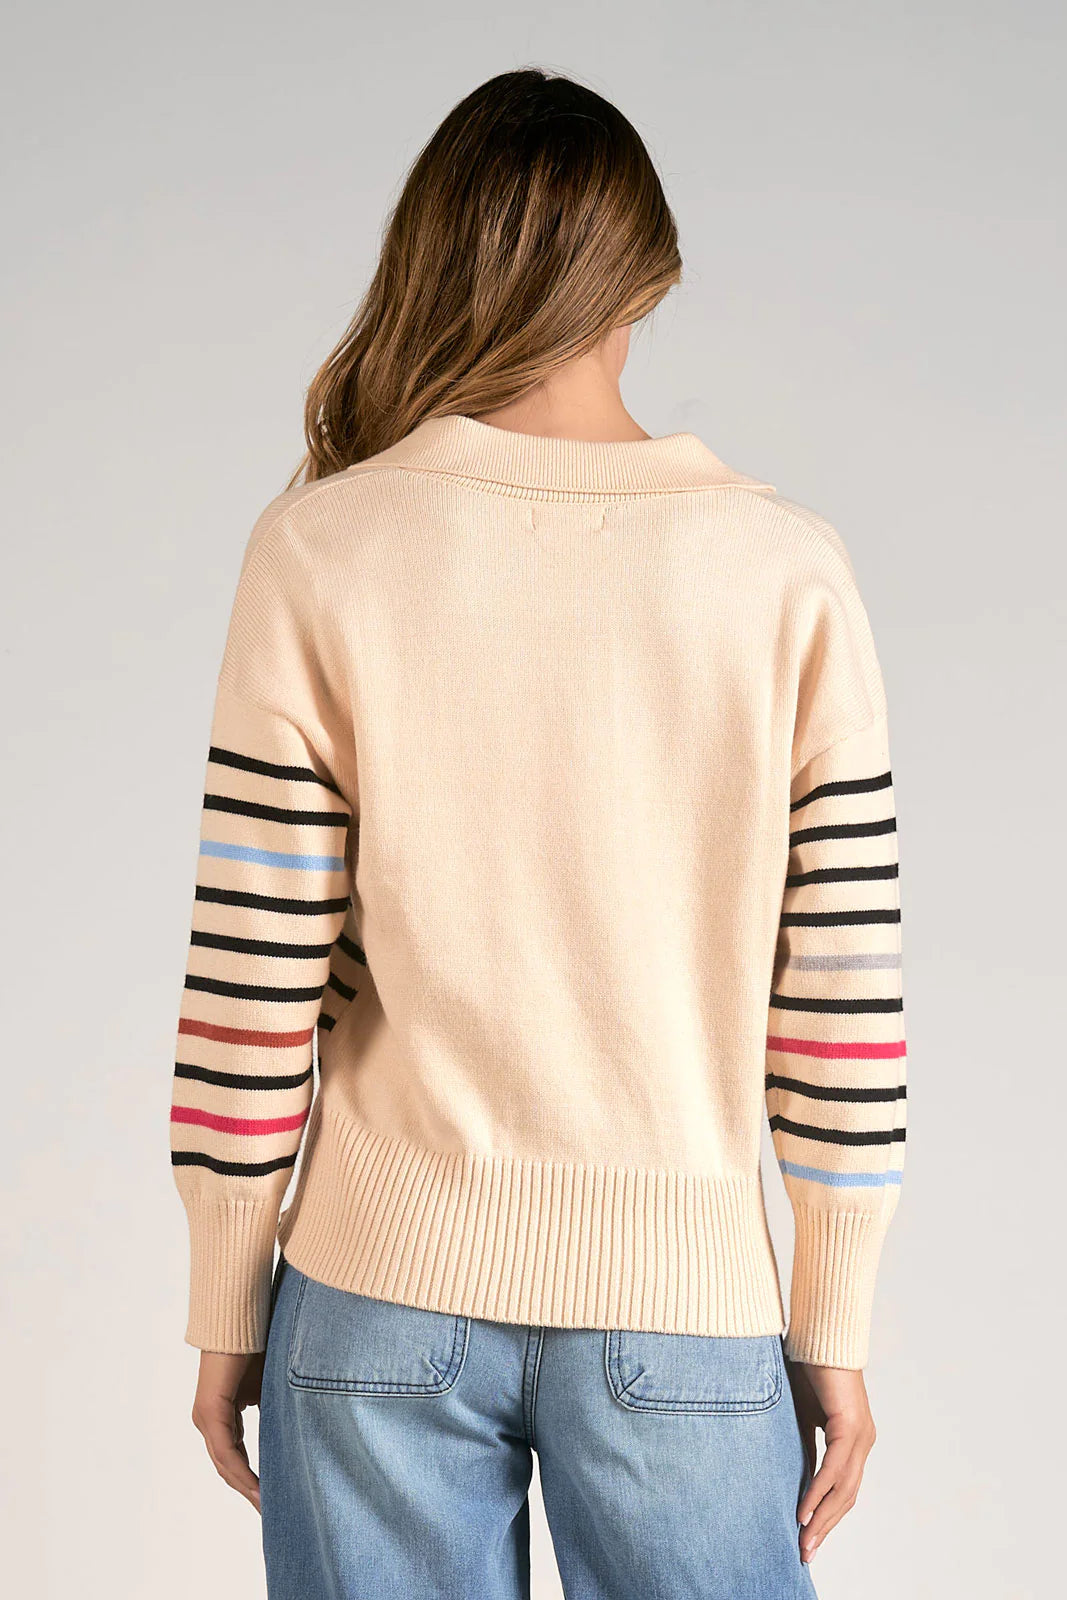 Stripe Collared Sweater